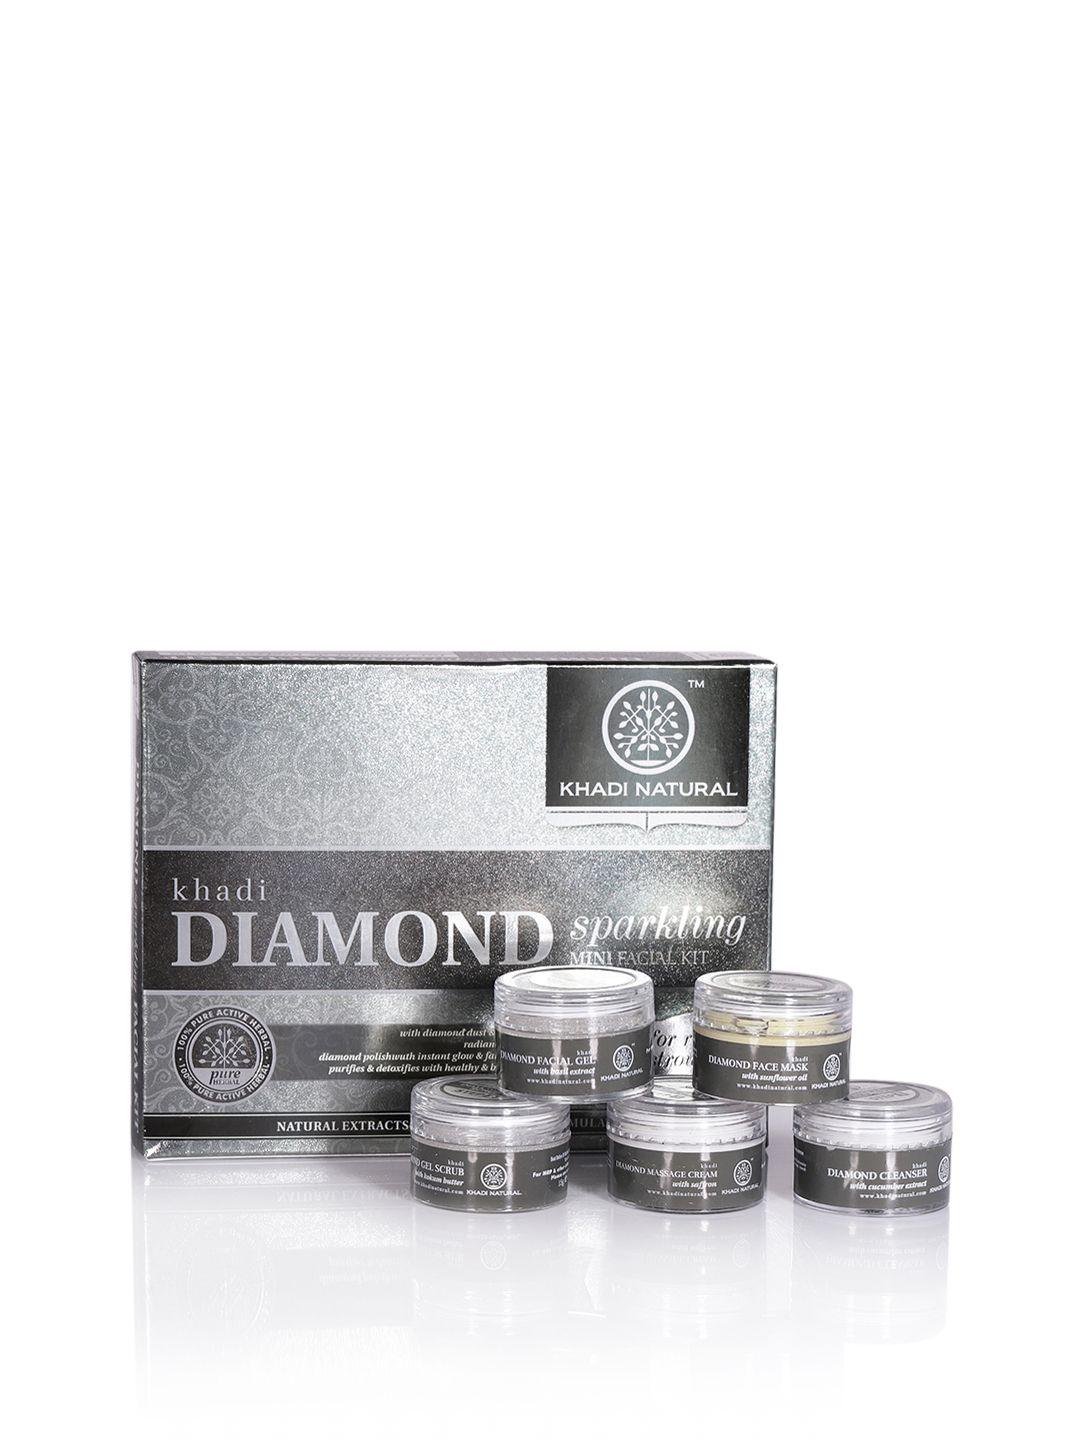 khadi natural sustainable diamond sparkling mini facial kit